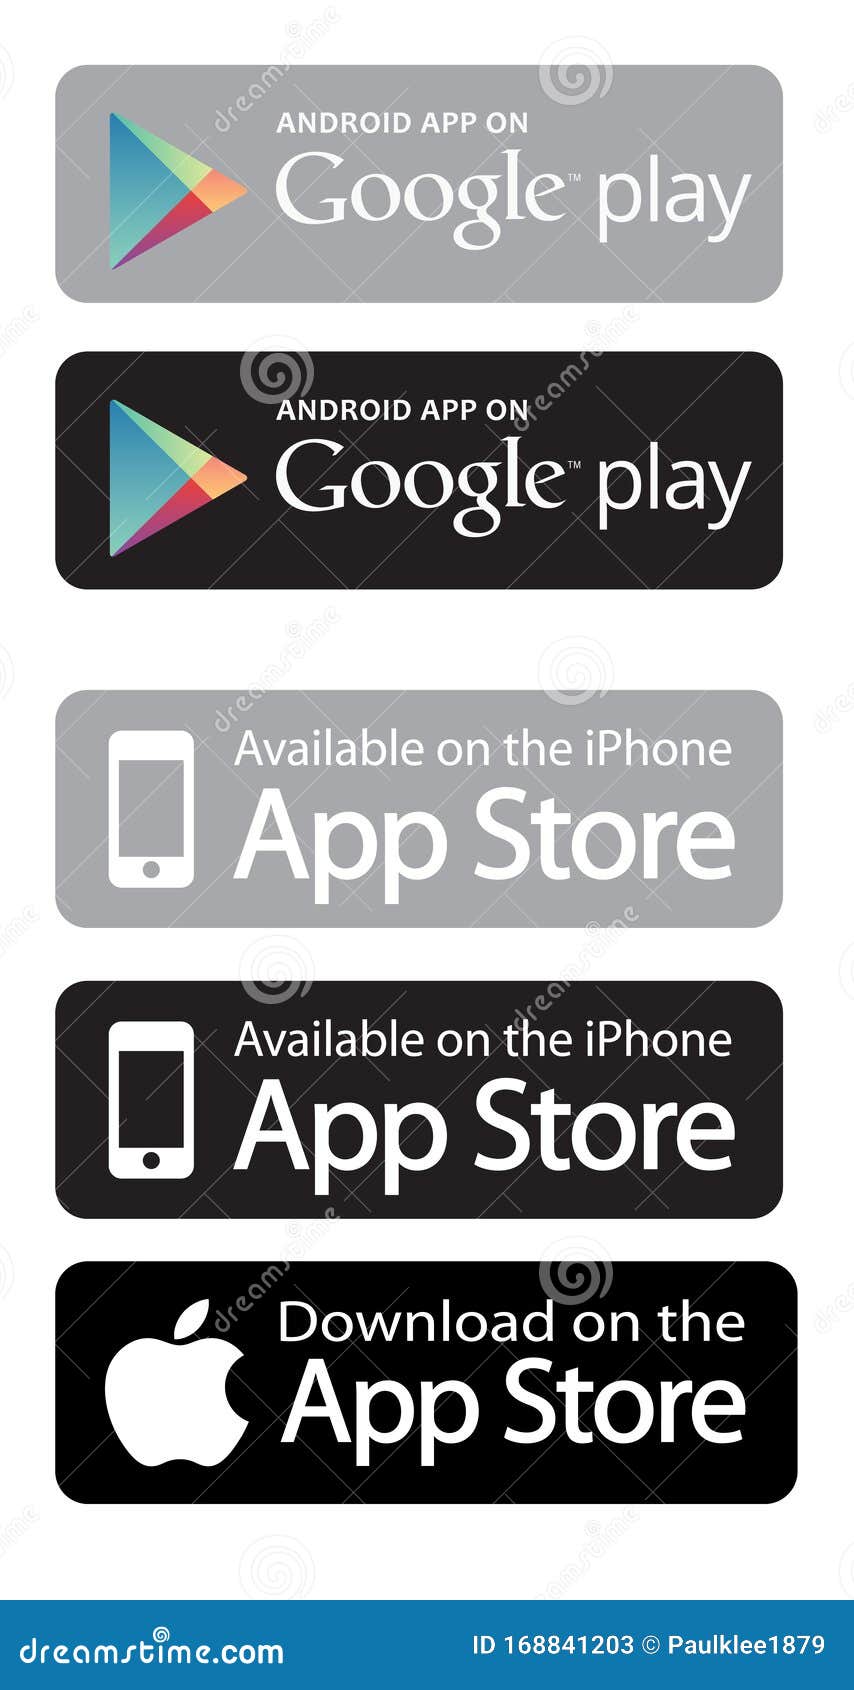 Google Play Store agora permite definir preferência de download